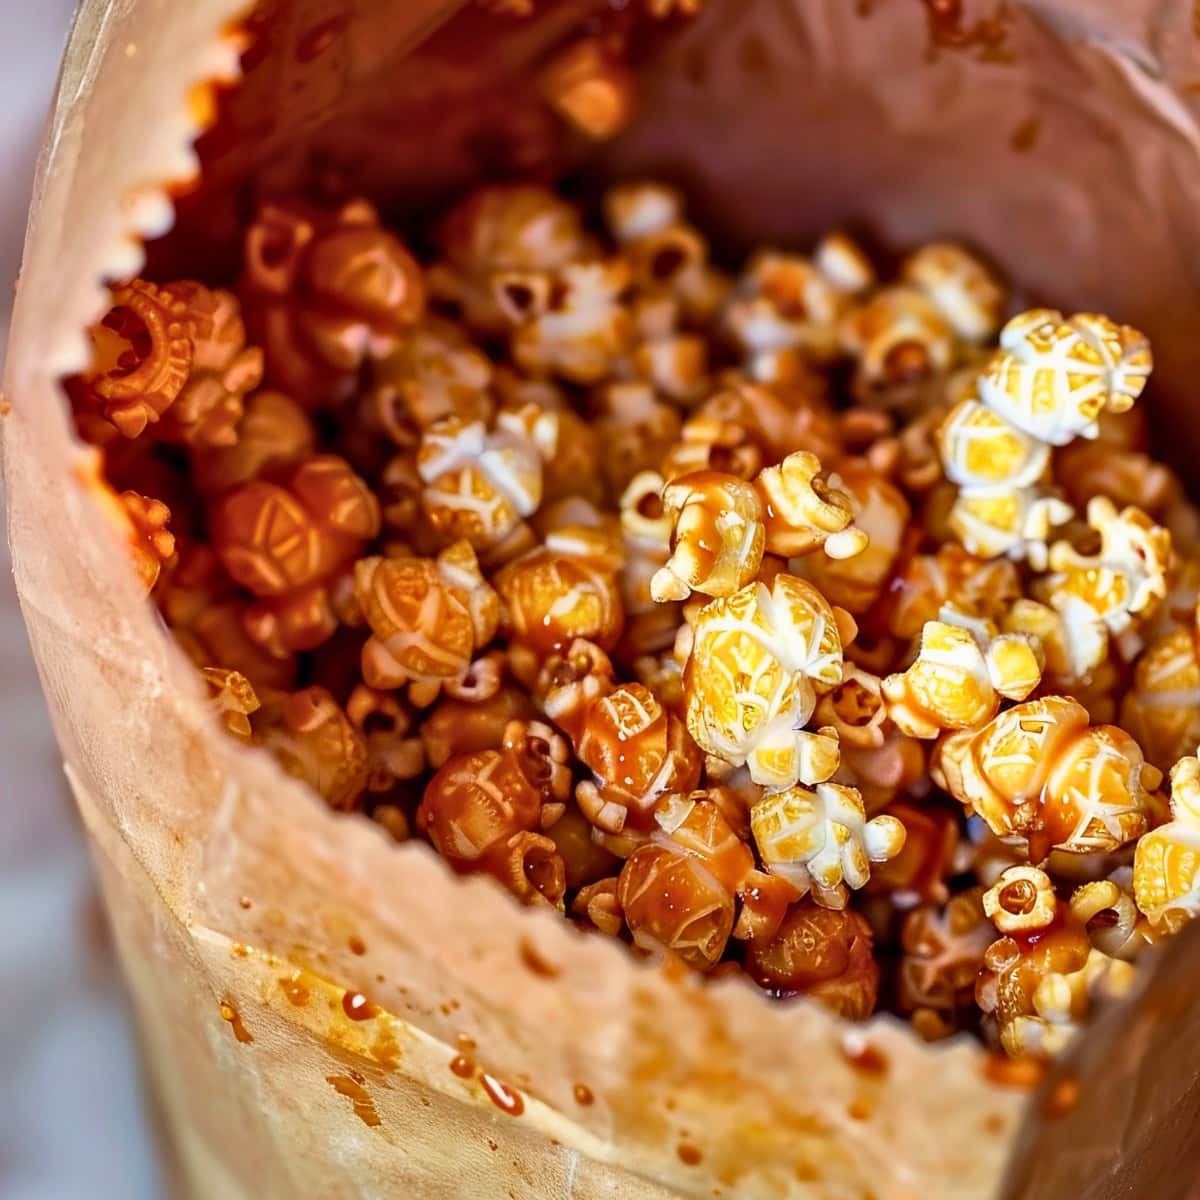 Top View Microwave Caramel Popcorn in the Popcorn Bag